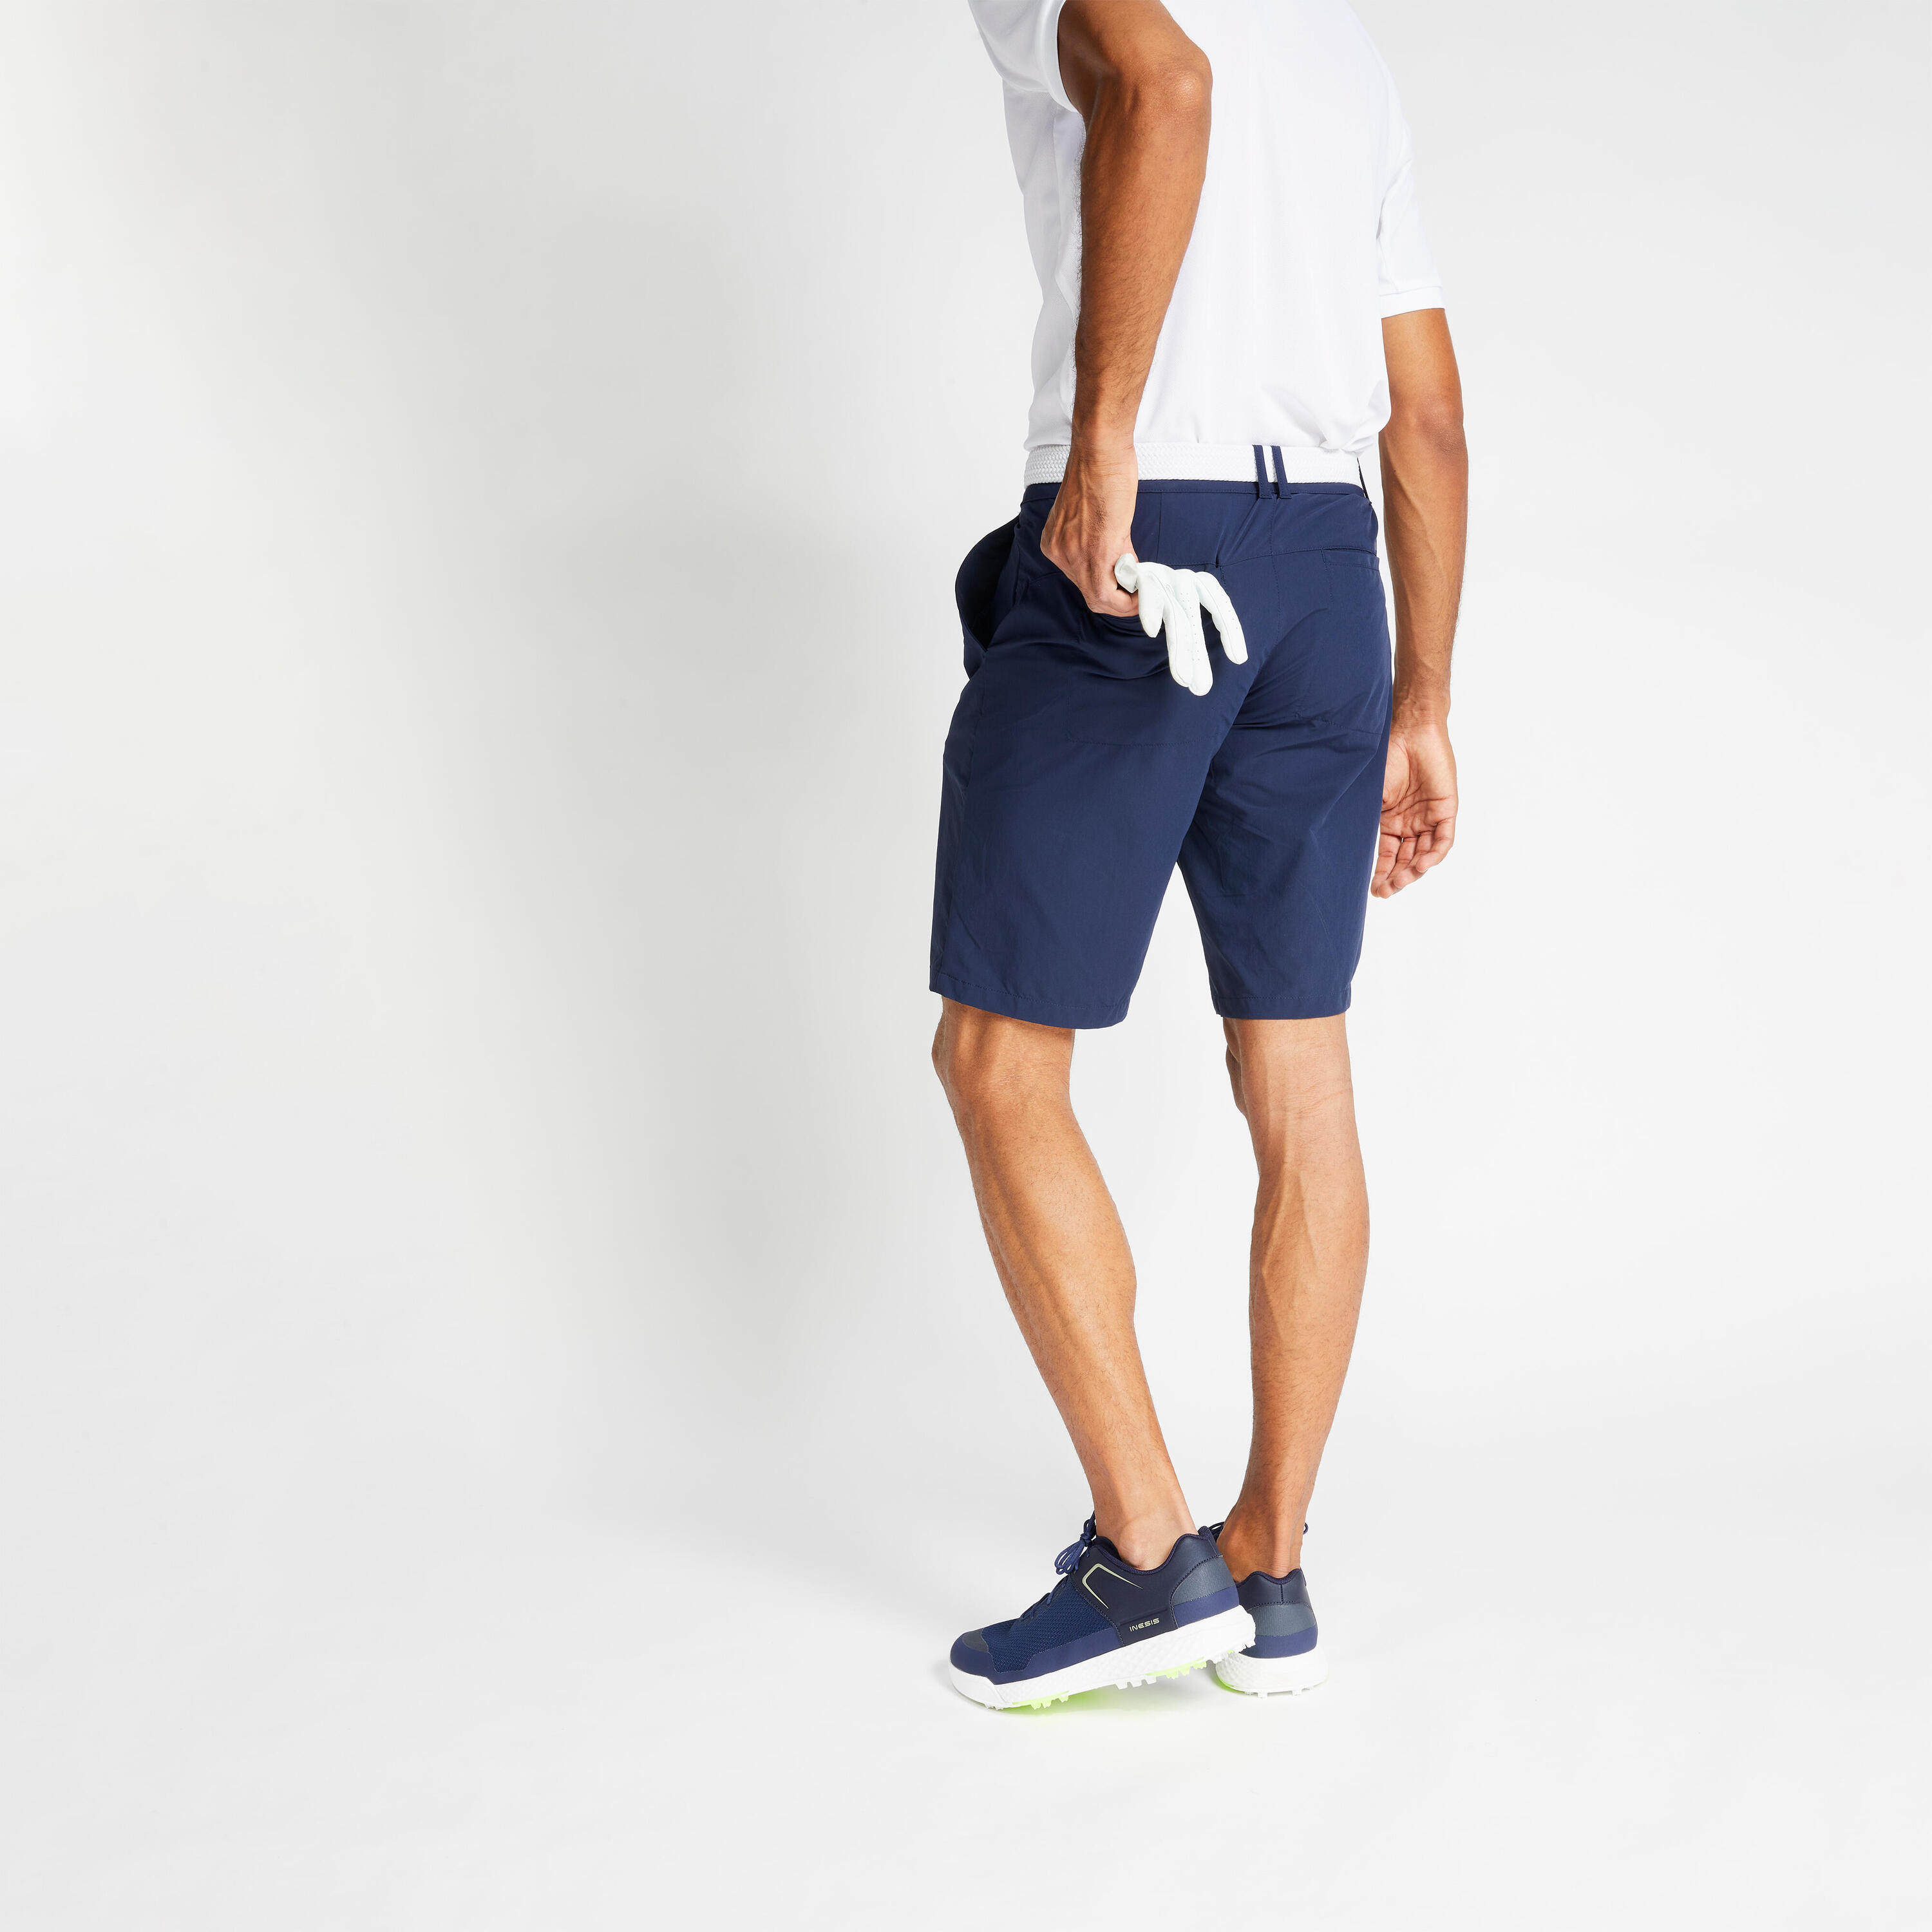 Men's golf shorts - WW500 navy blue 2/4